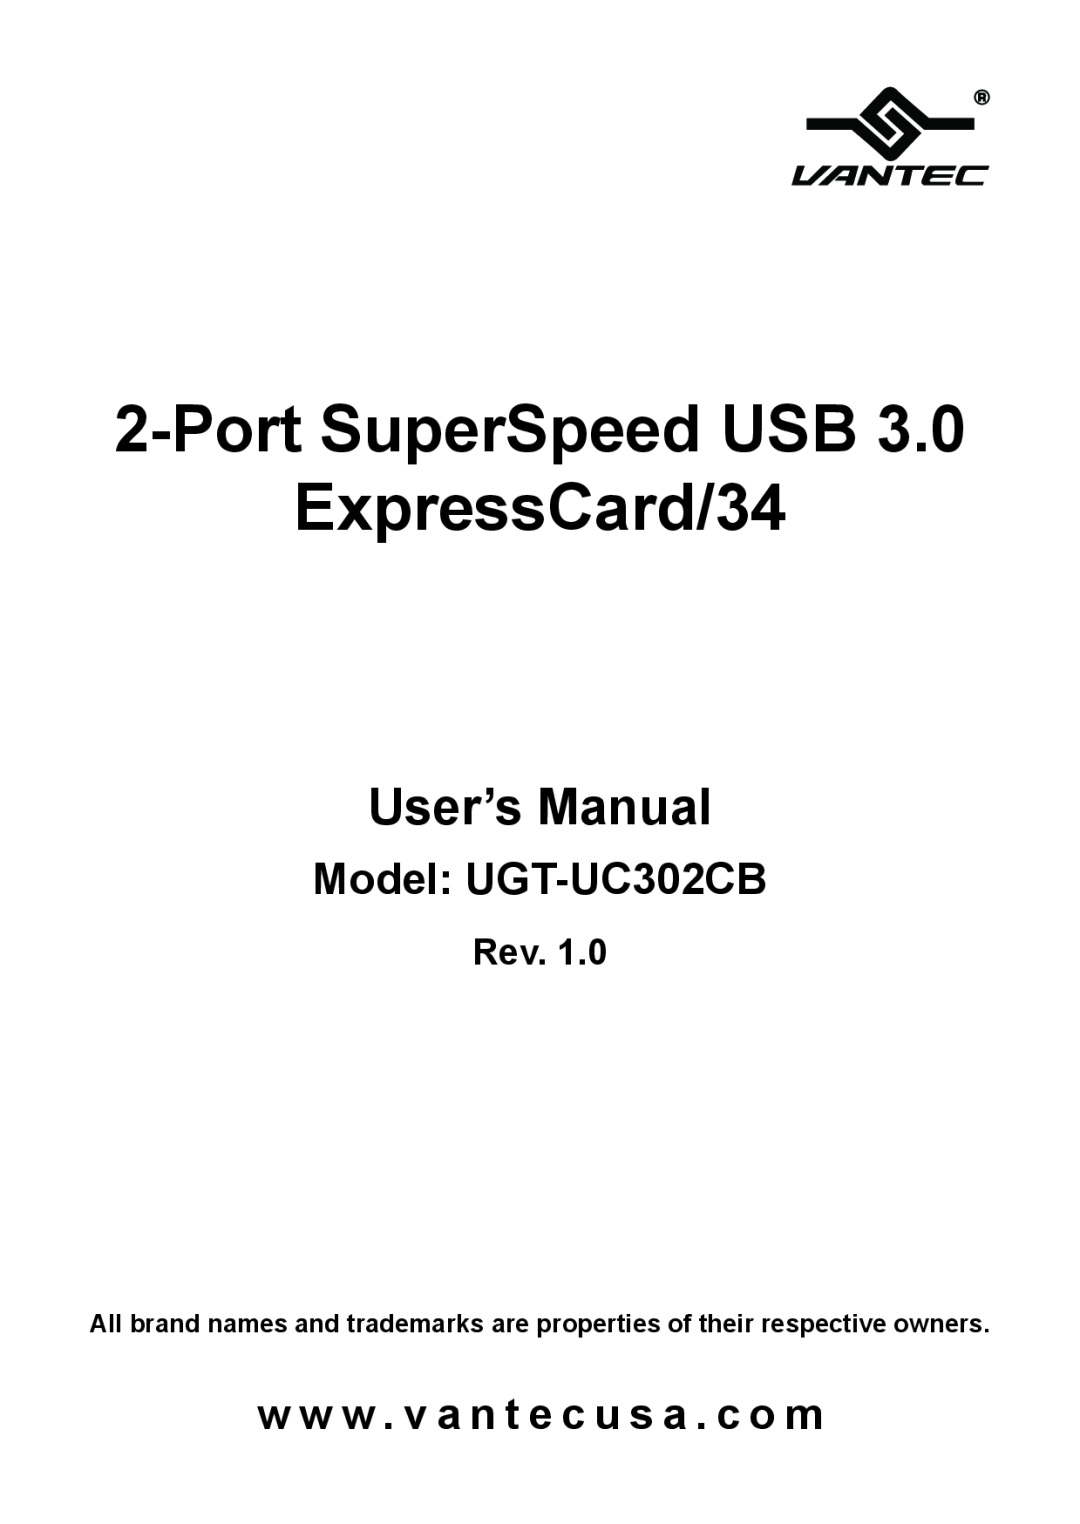 Vantec user manual Port SuperSpeed USB ExpressCard/34, User’s Manual, Model UGT-UC302CB 